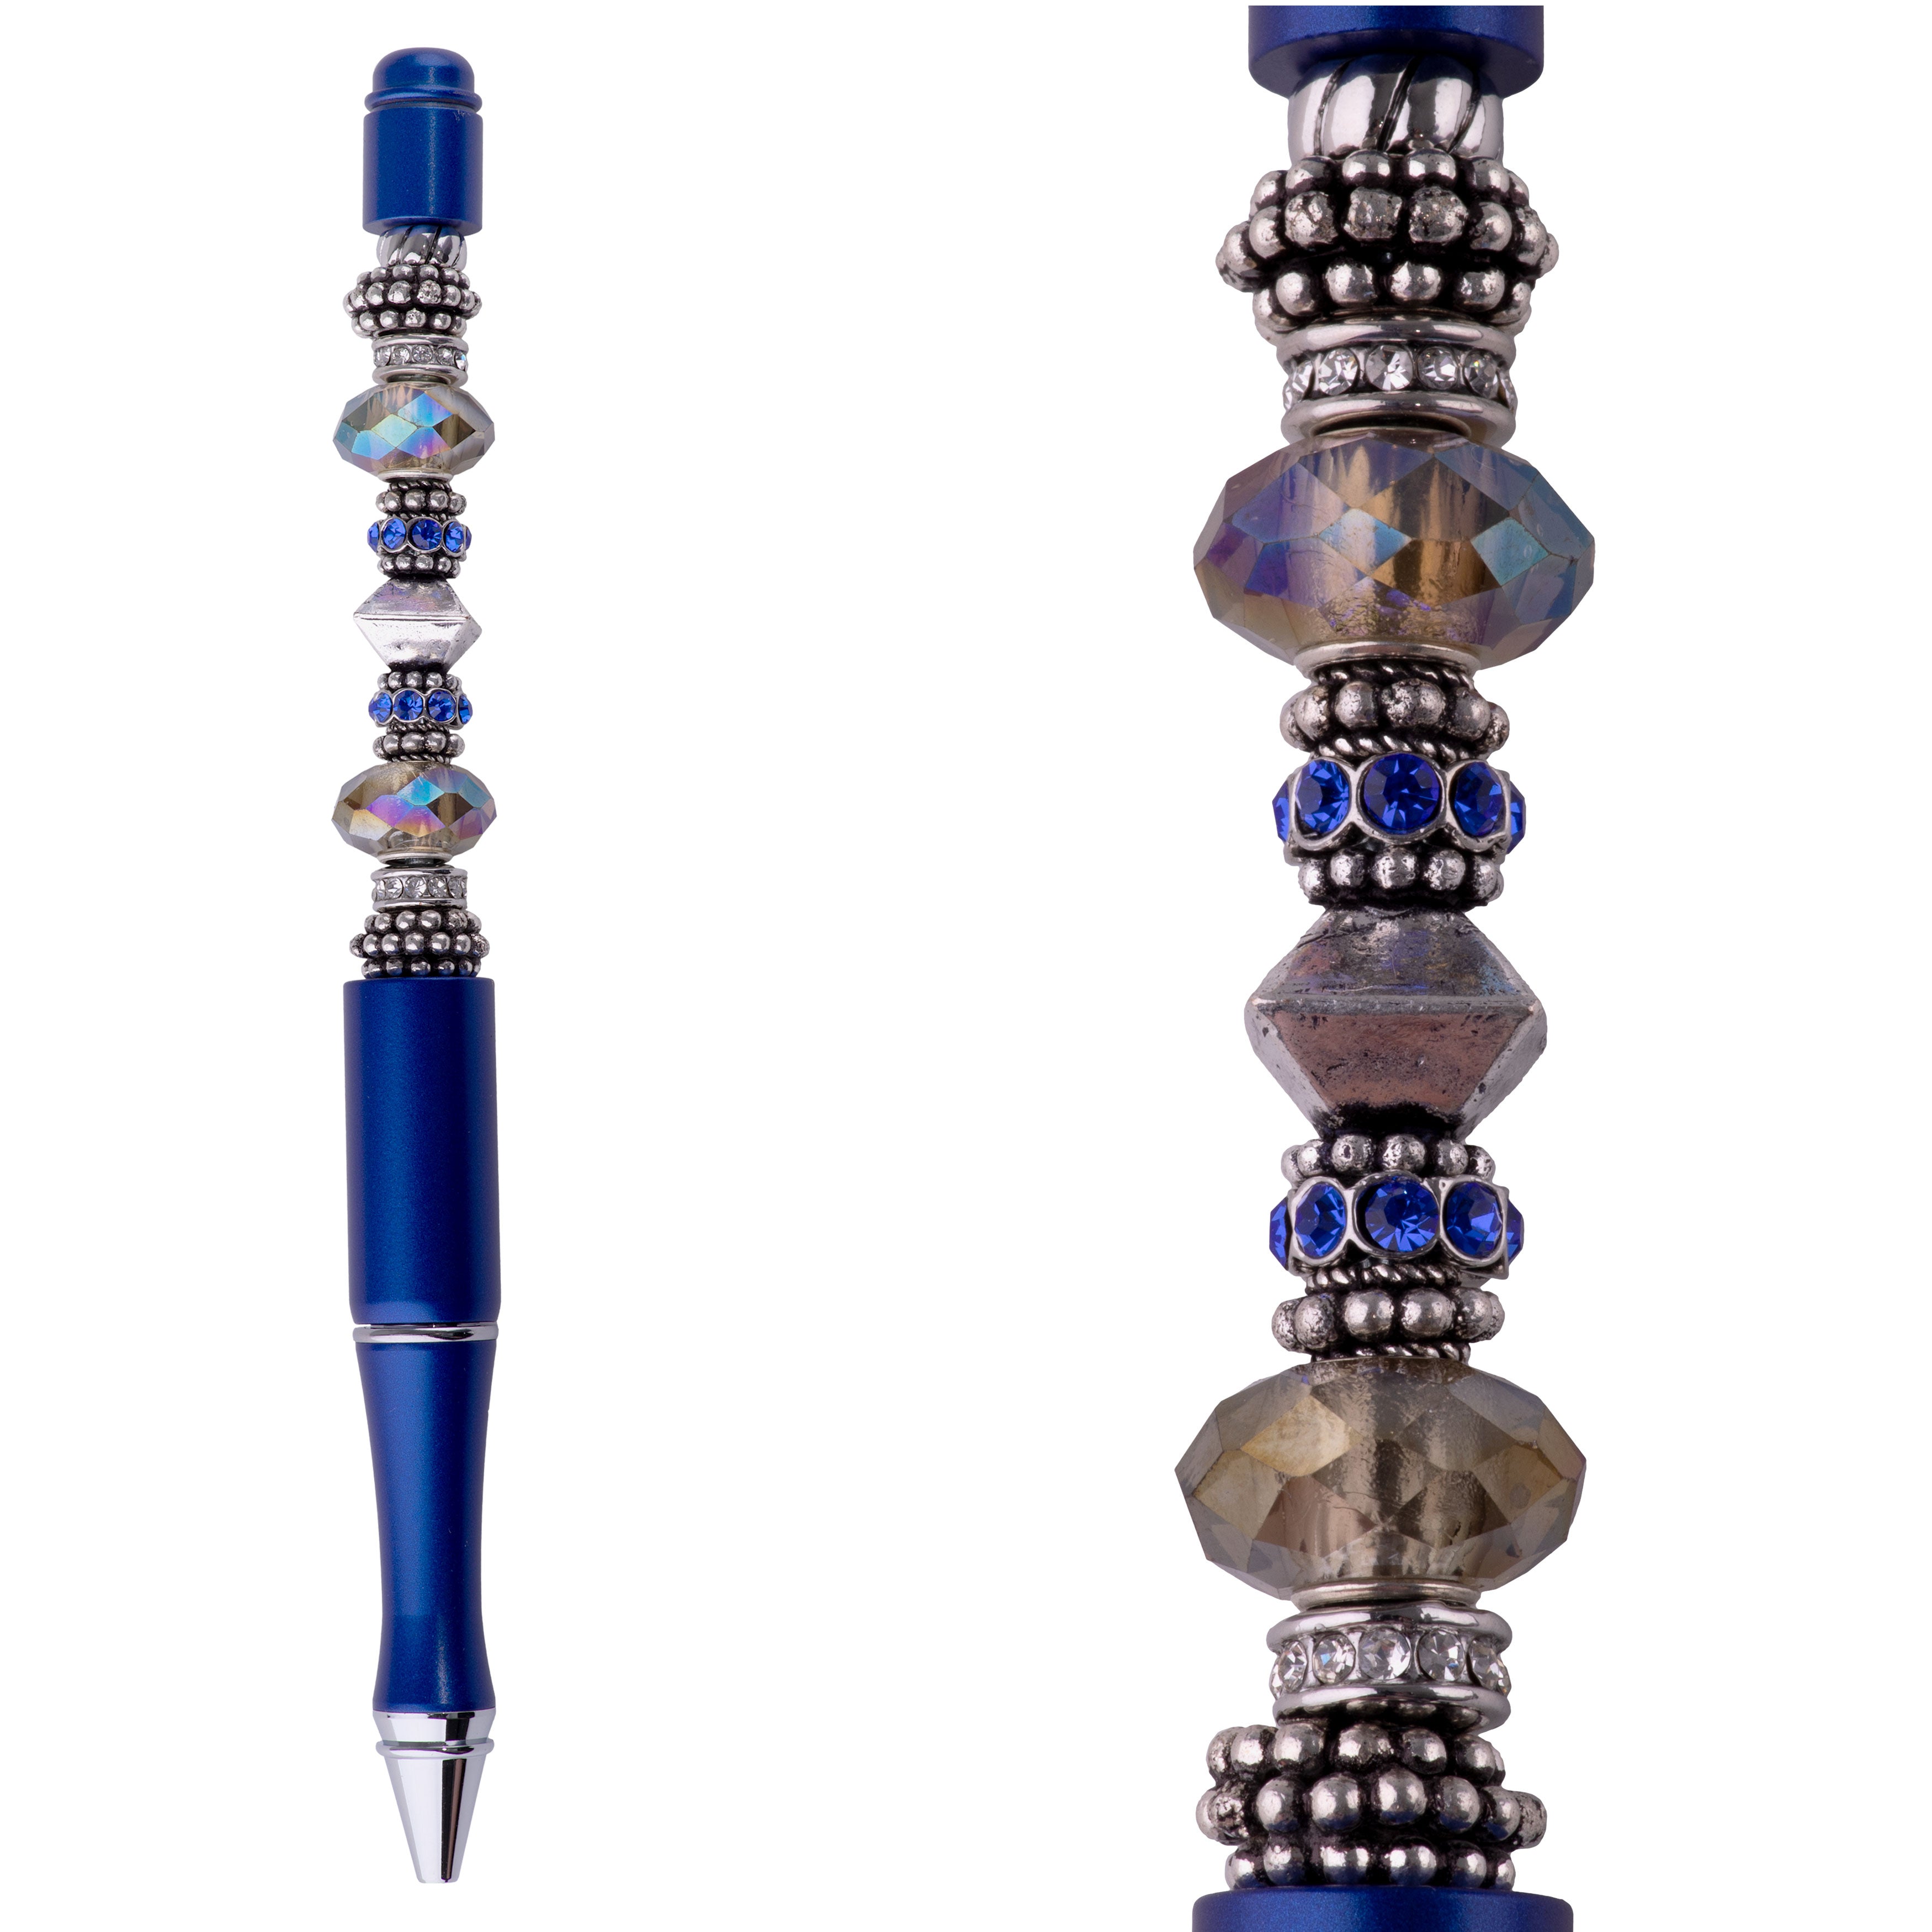 Blue Shale Bead Pen Kit - Pen Not Included